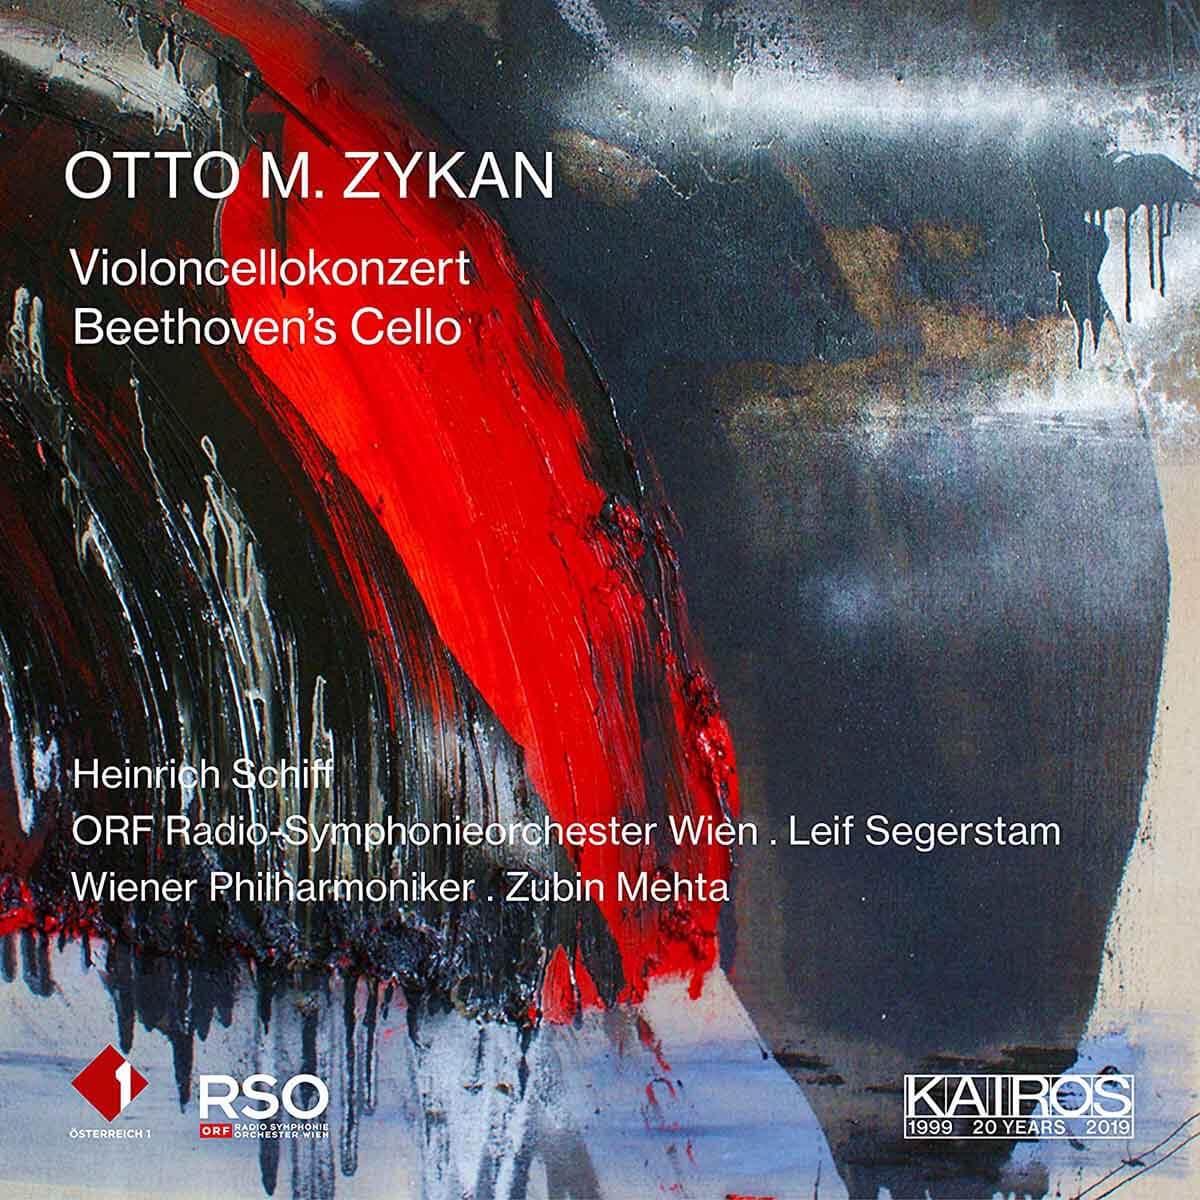 Otto M Zykan - Violoncellokonzert